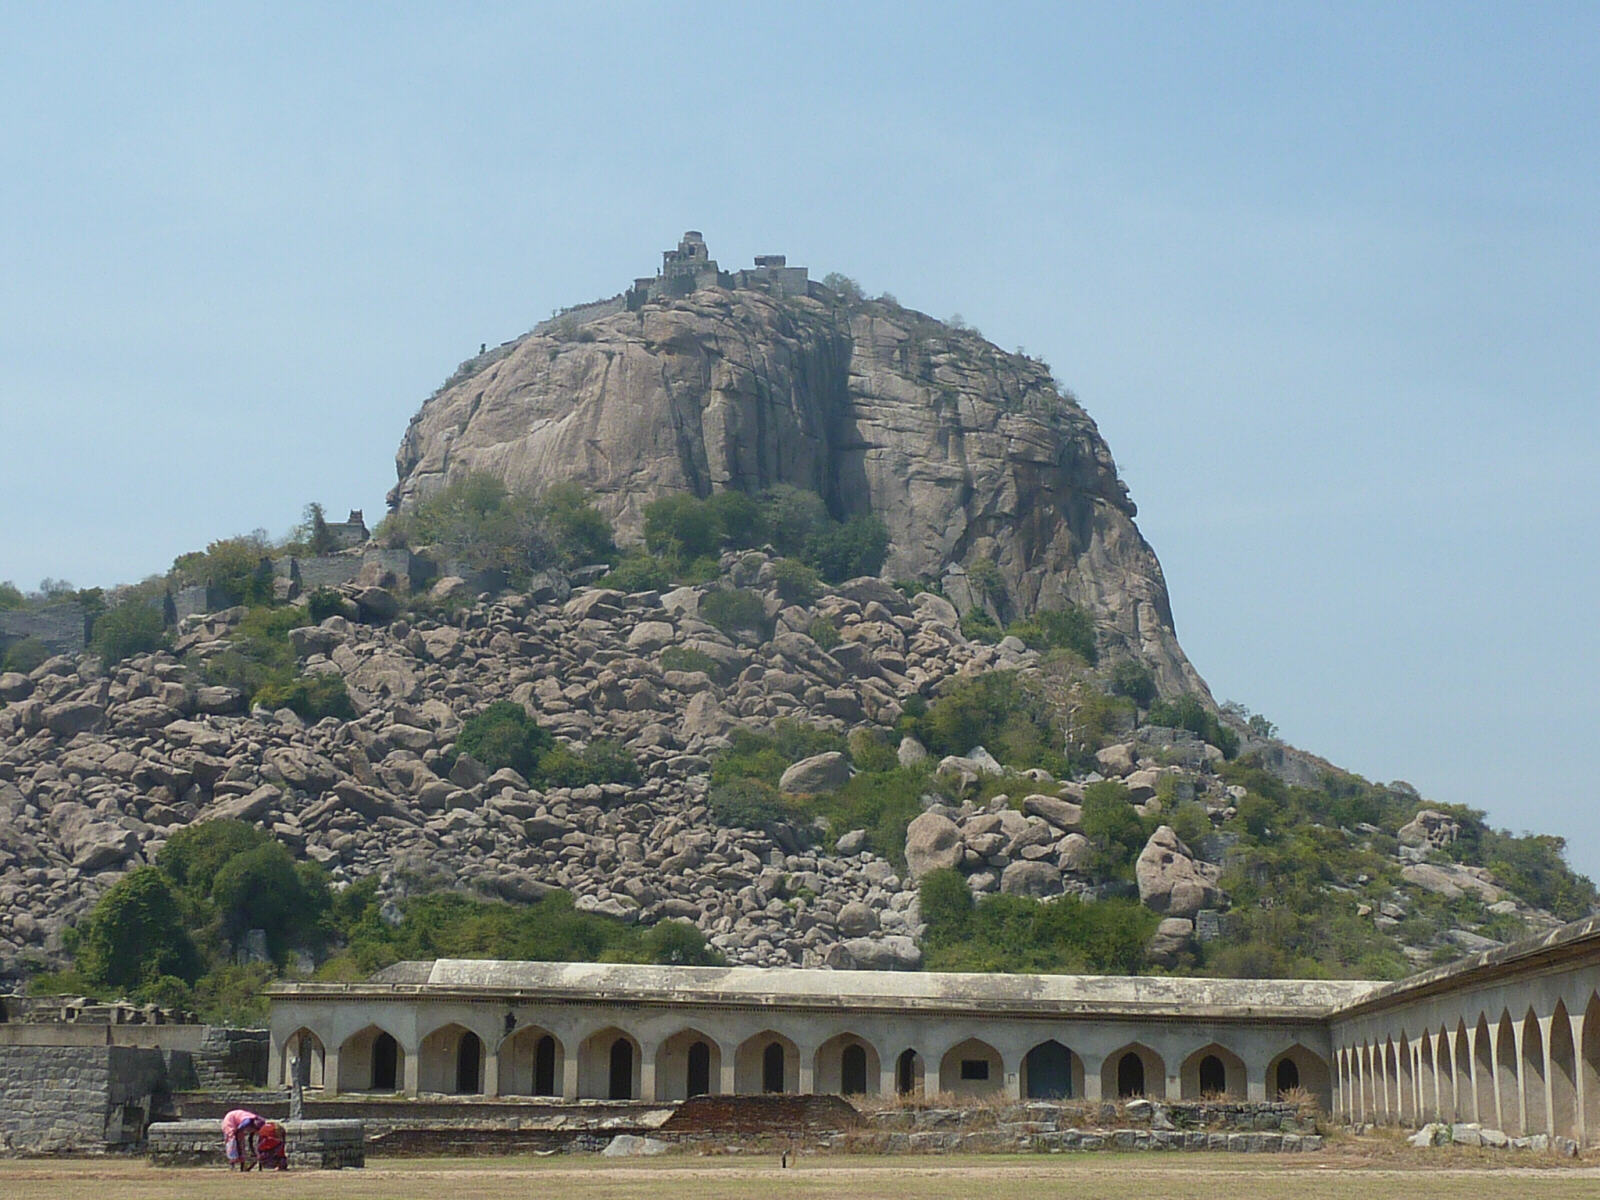 Gingee fort near Pondicherry, India